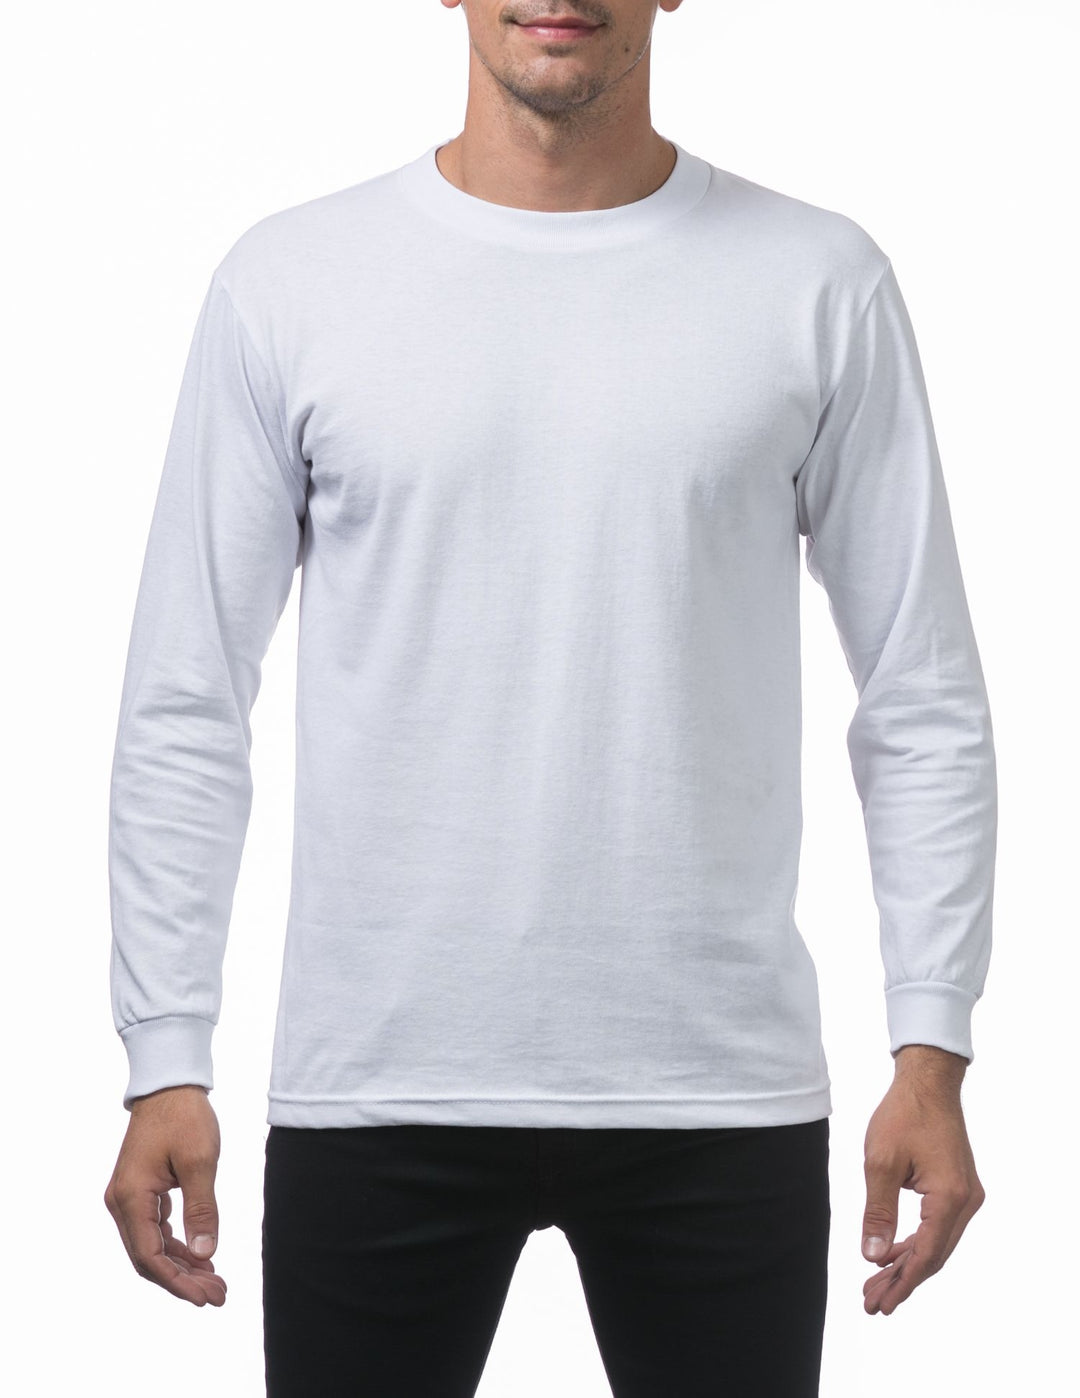 Pro Club Men's Comfort Cotton Long Sleeve T-Shirt White